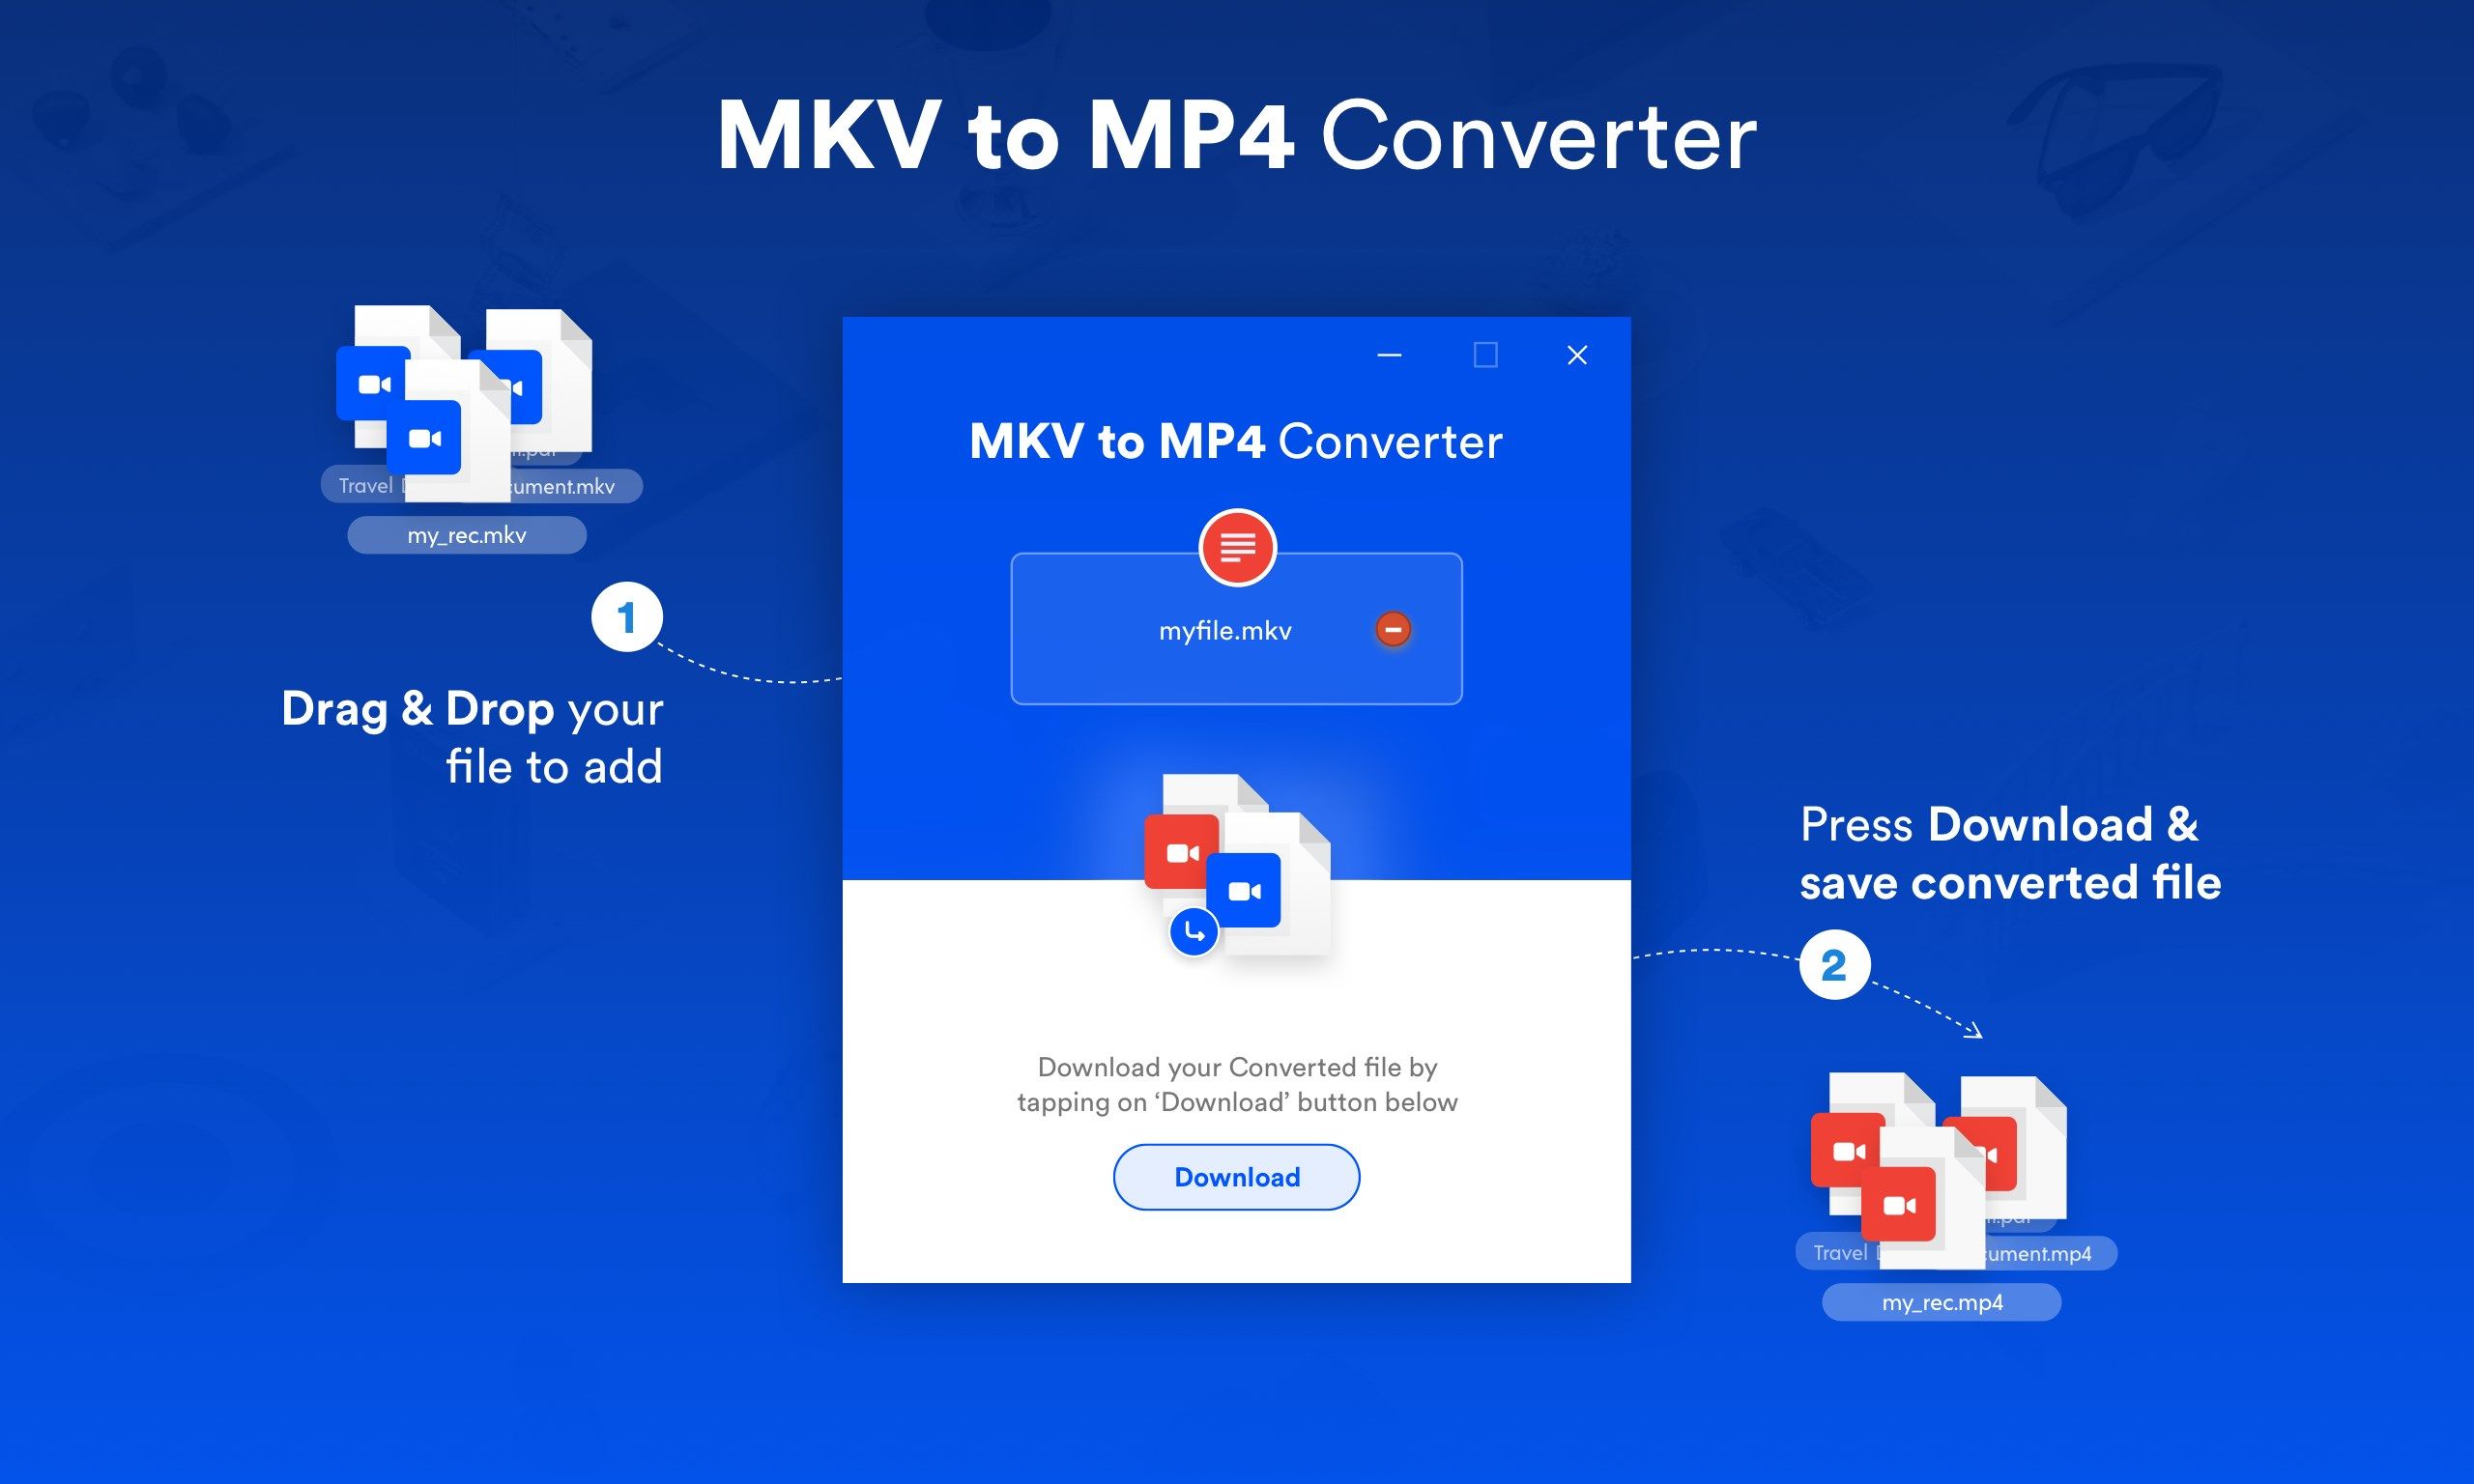 MKV to MP4 Converter...